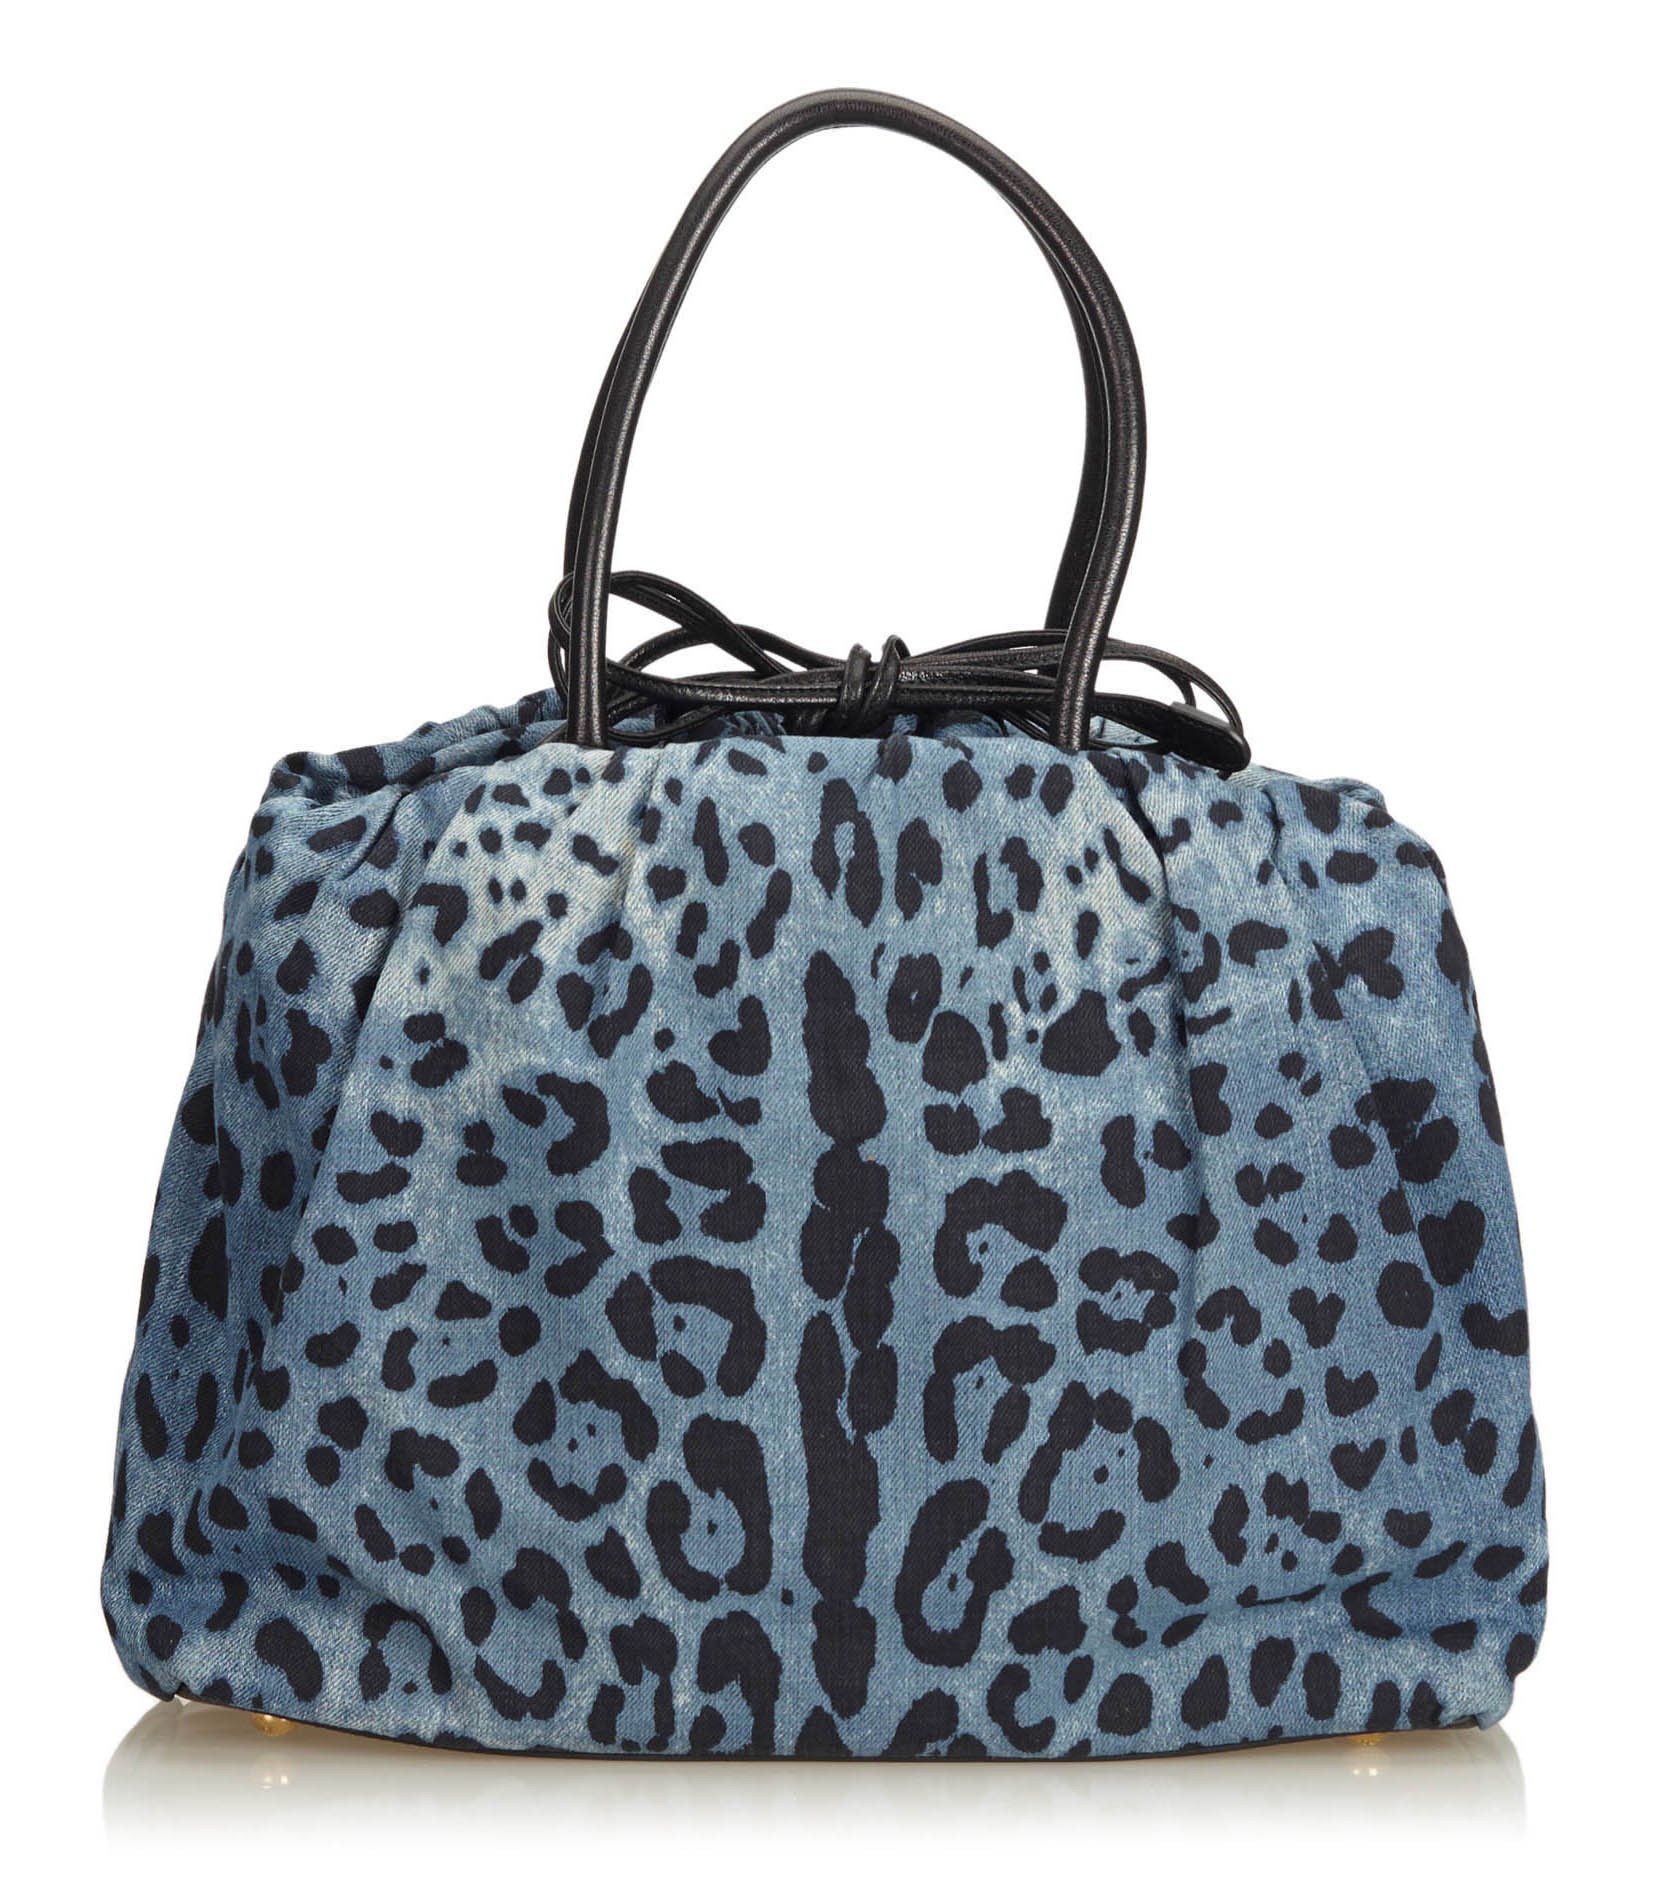 dolce and gabbana leopard bag